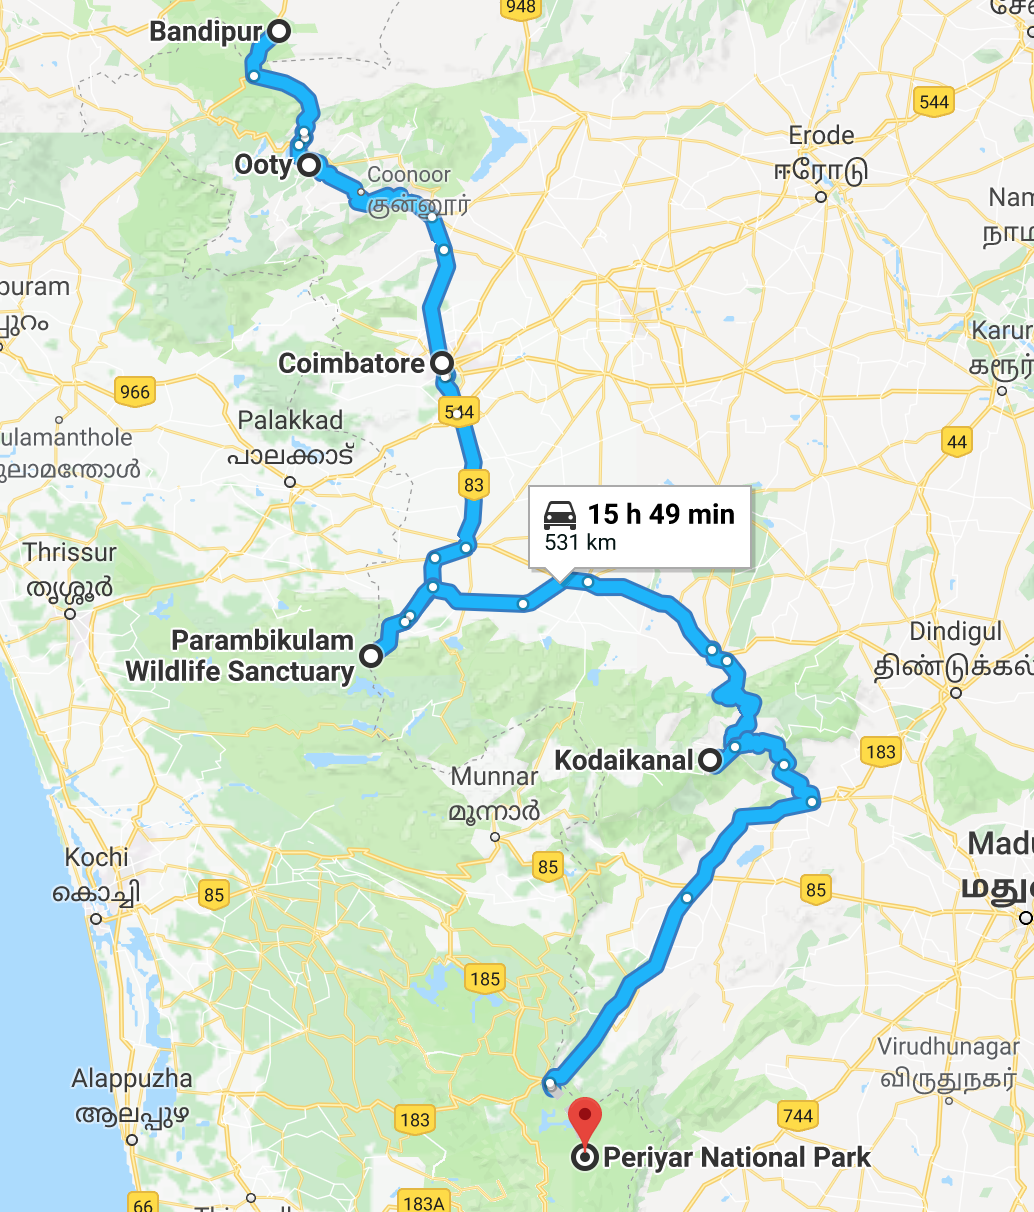 Bandipur to Periyar | Plan The Unplanned